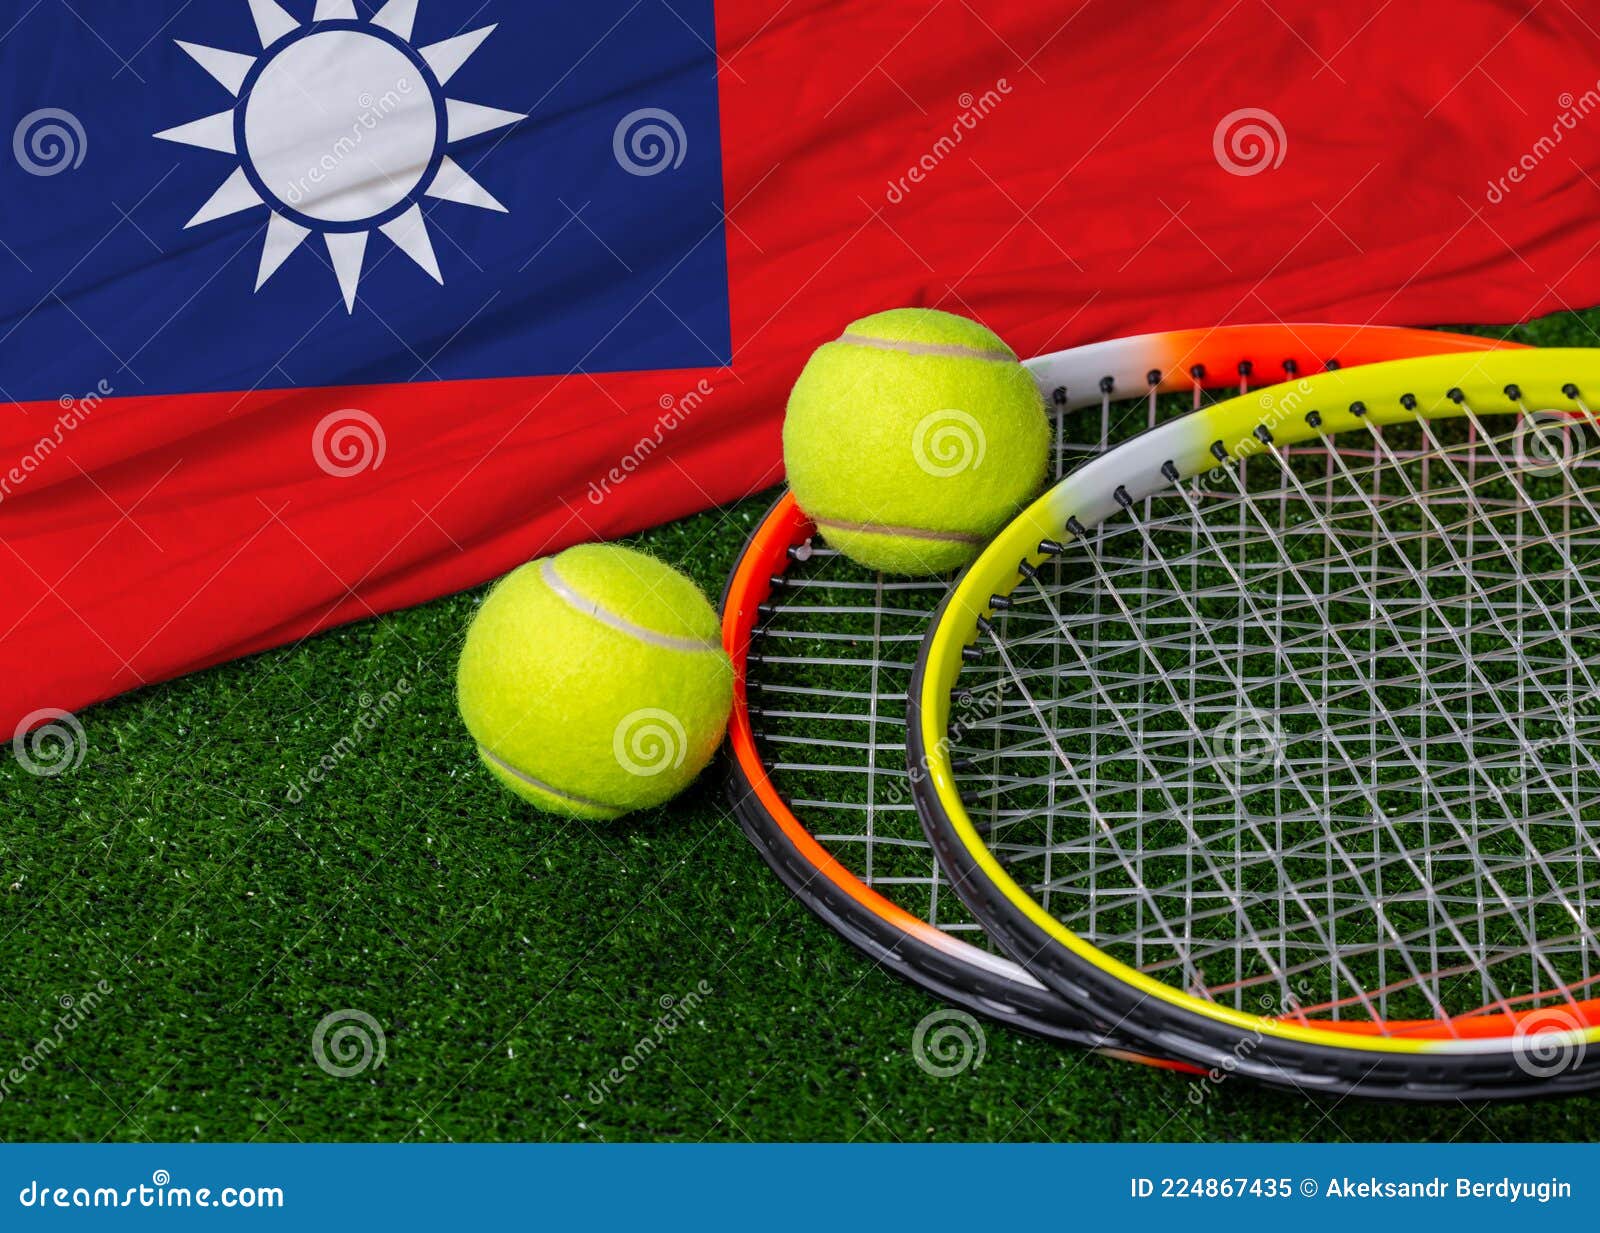 Taiwan Tennis Courts Tennis Racquet Tennis Racket Tennis Balls Tennis